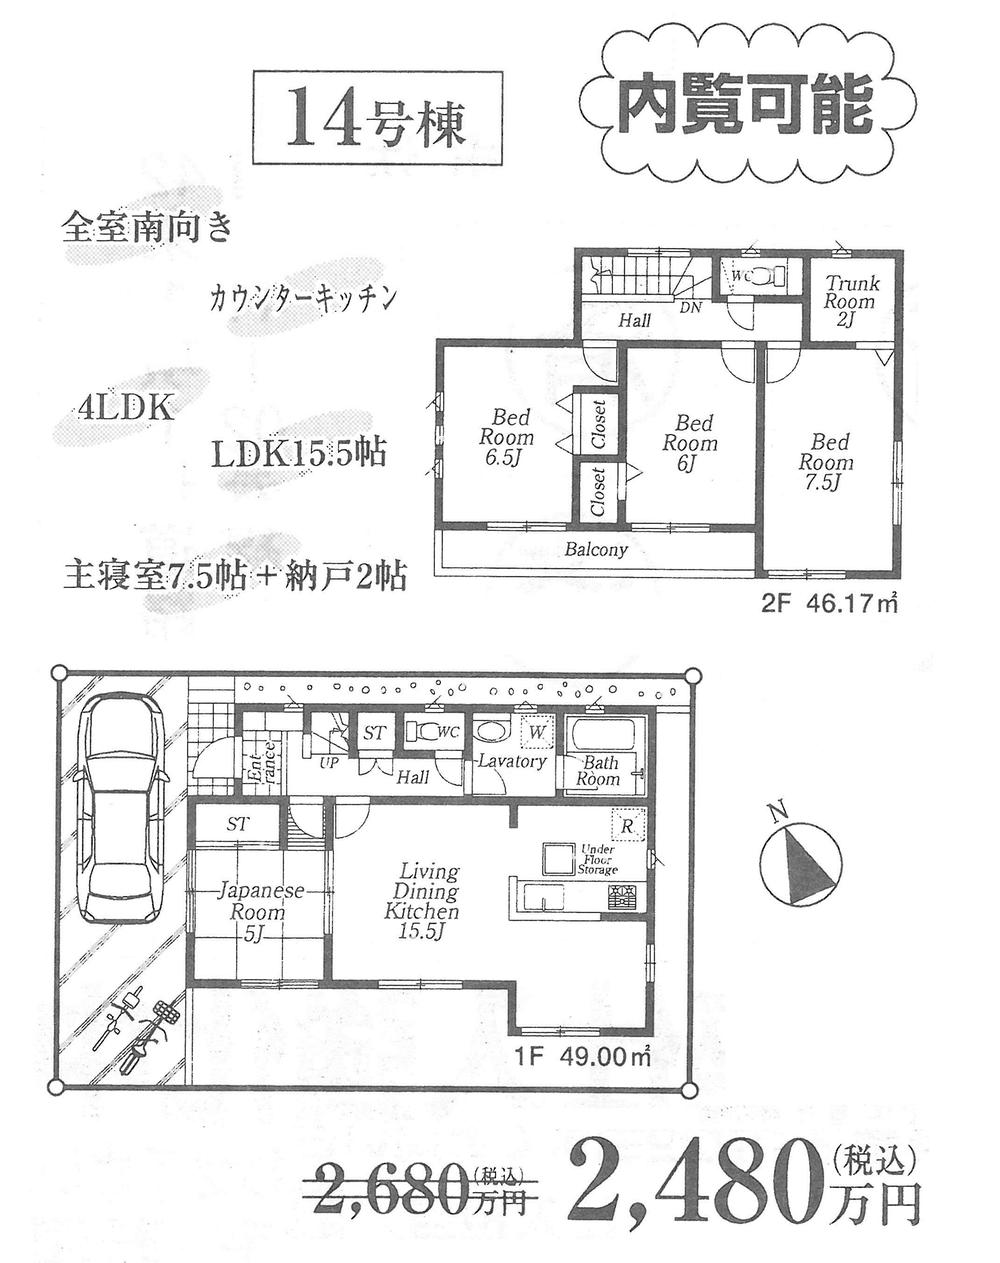 Floor plan. (14), Price 24,800,000 yen, 4LDK, Land area 100.11 sq m , Building area 95.17 sq m